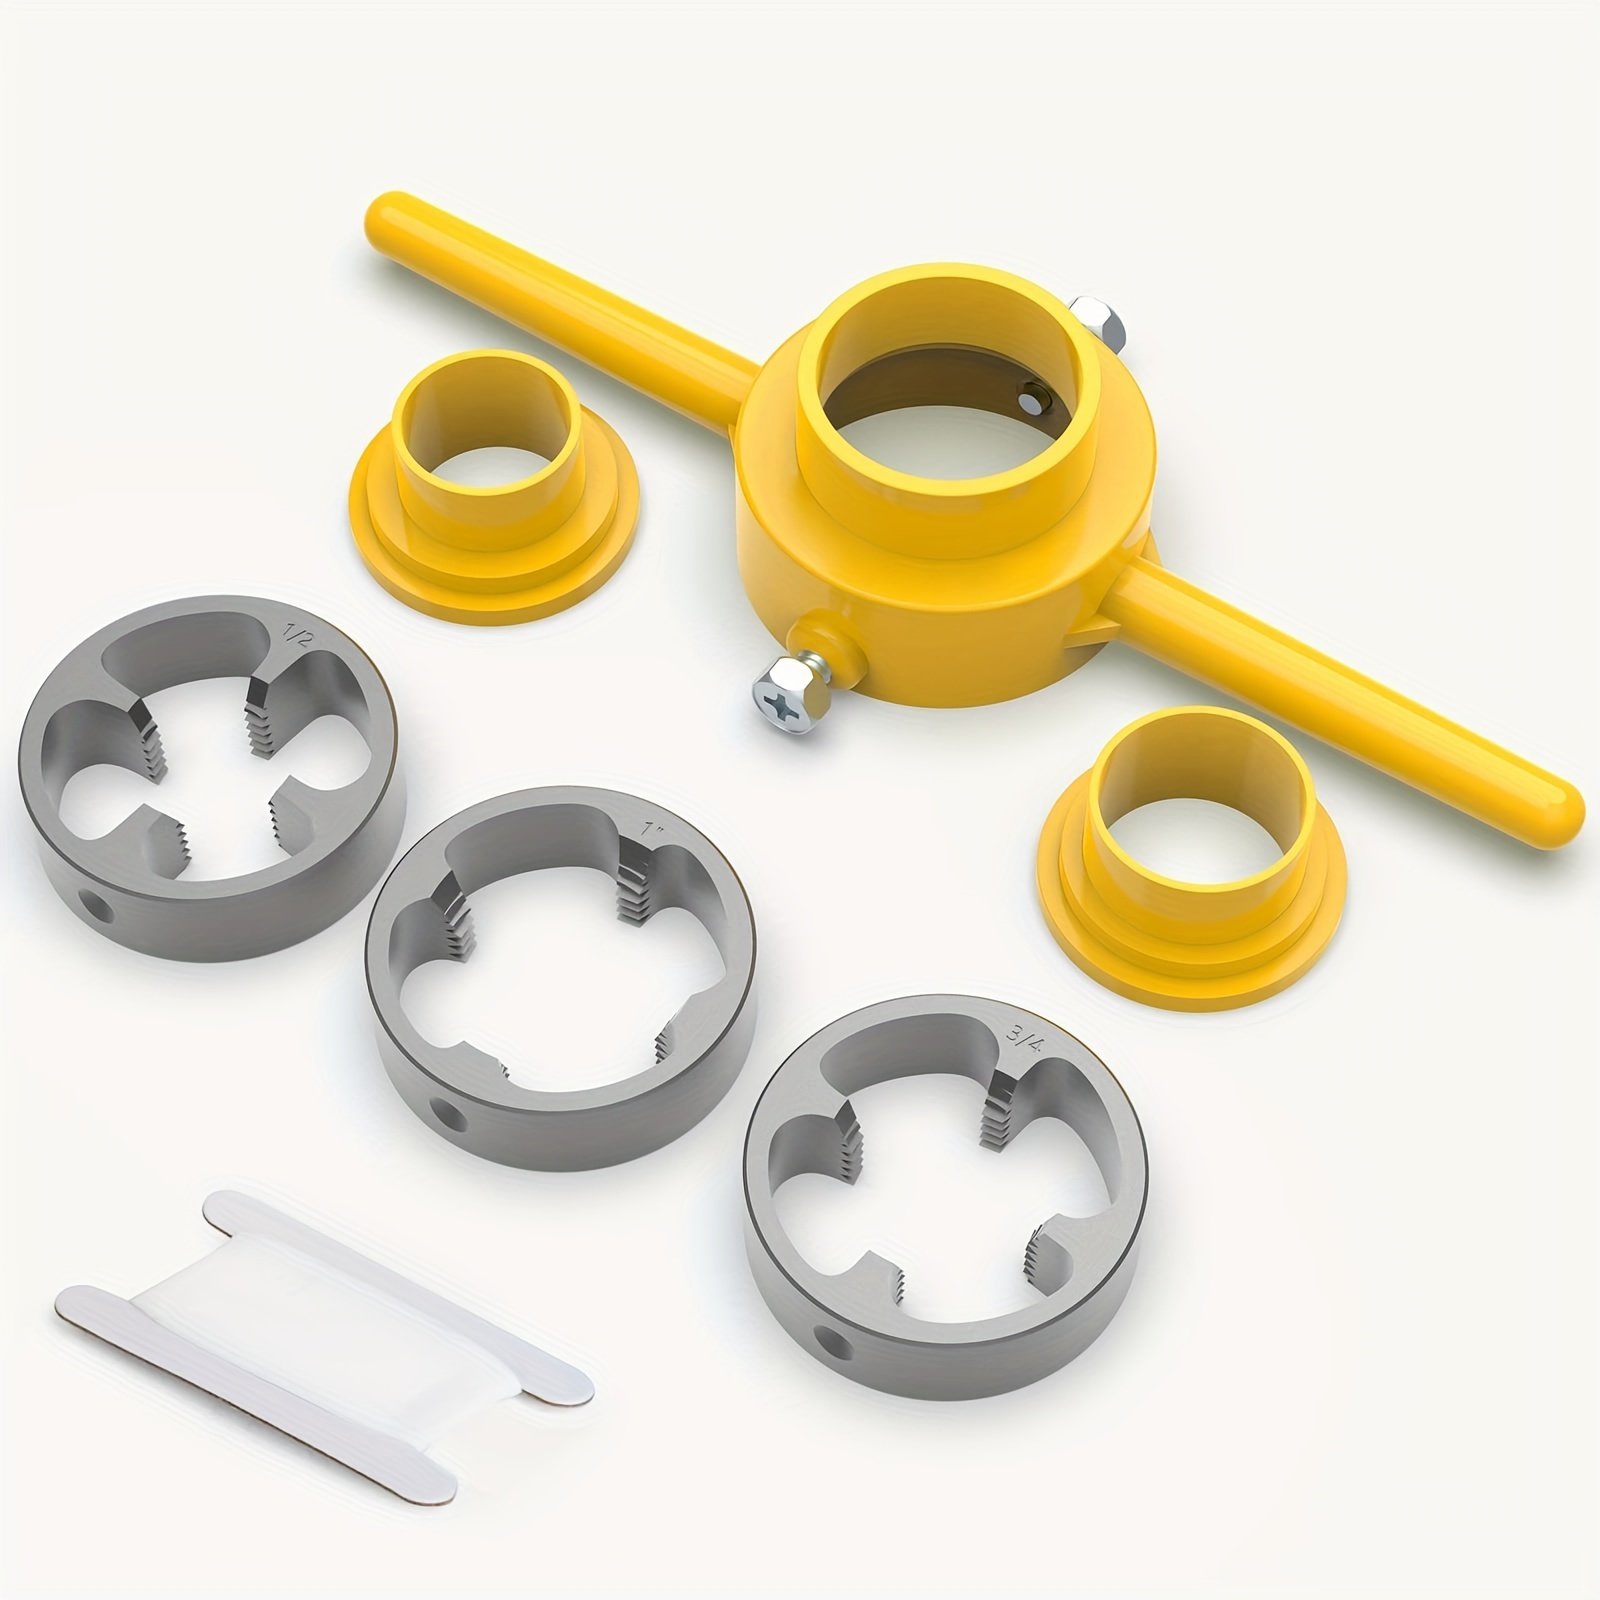 

Premium Pvc Thread Maker Tool Kit - Npt Die Set With 3 Sizes (1/2", 3/4", 1") - Durable Aluminum Alloy, Manual Operation